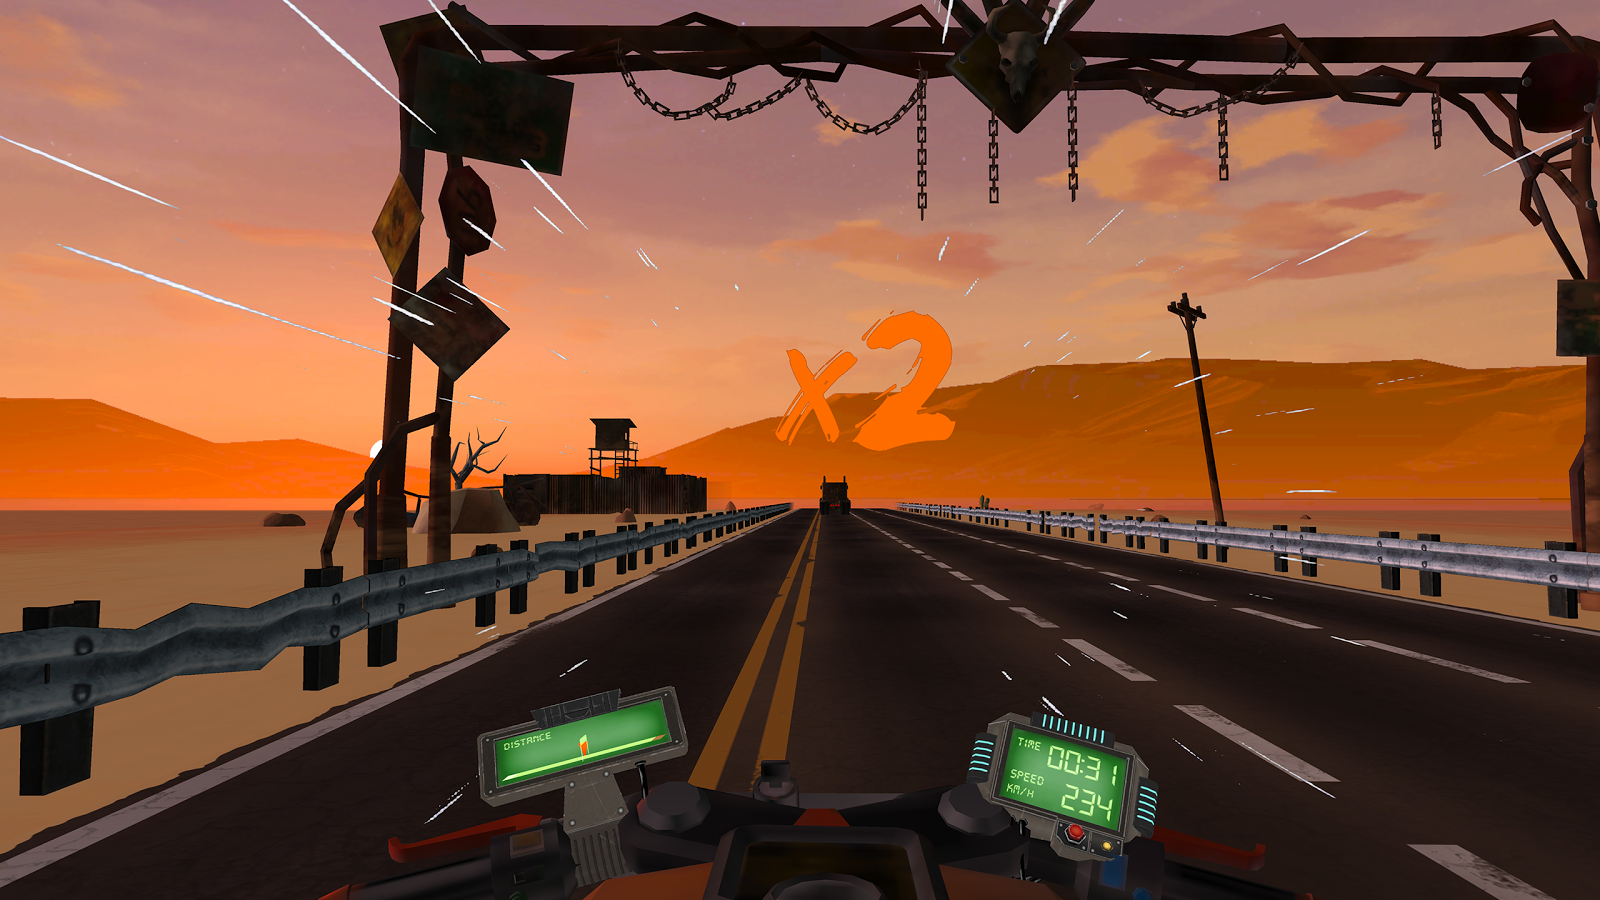 Apocalypse Rider - VR Bike Racing Game